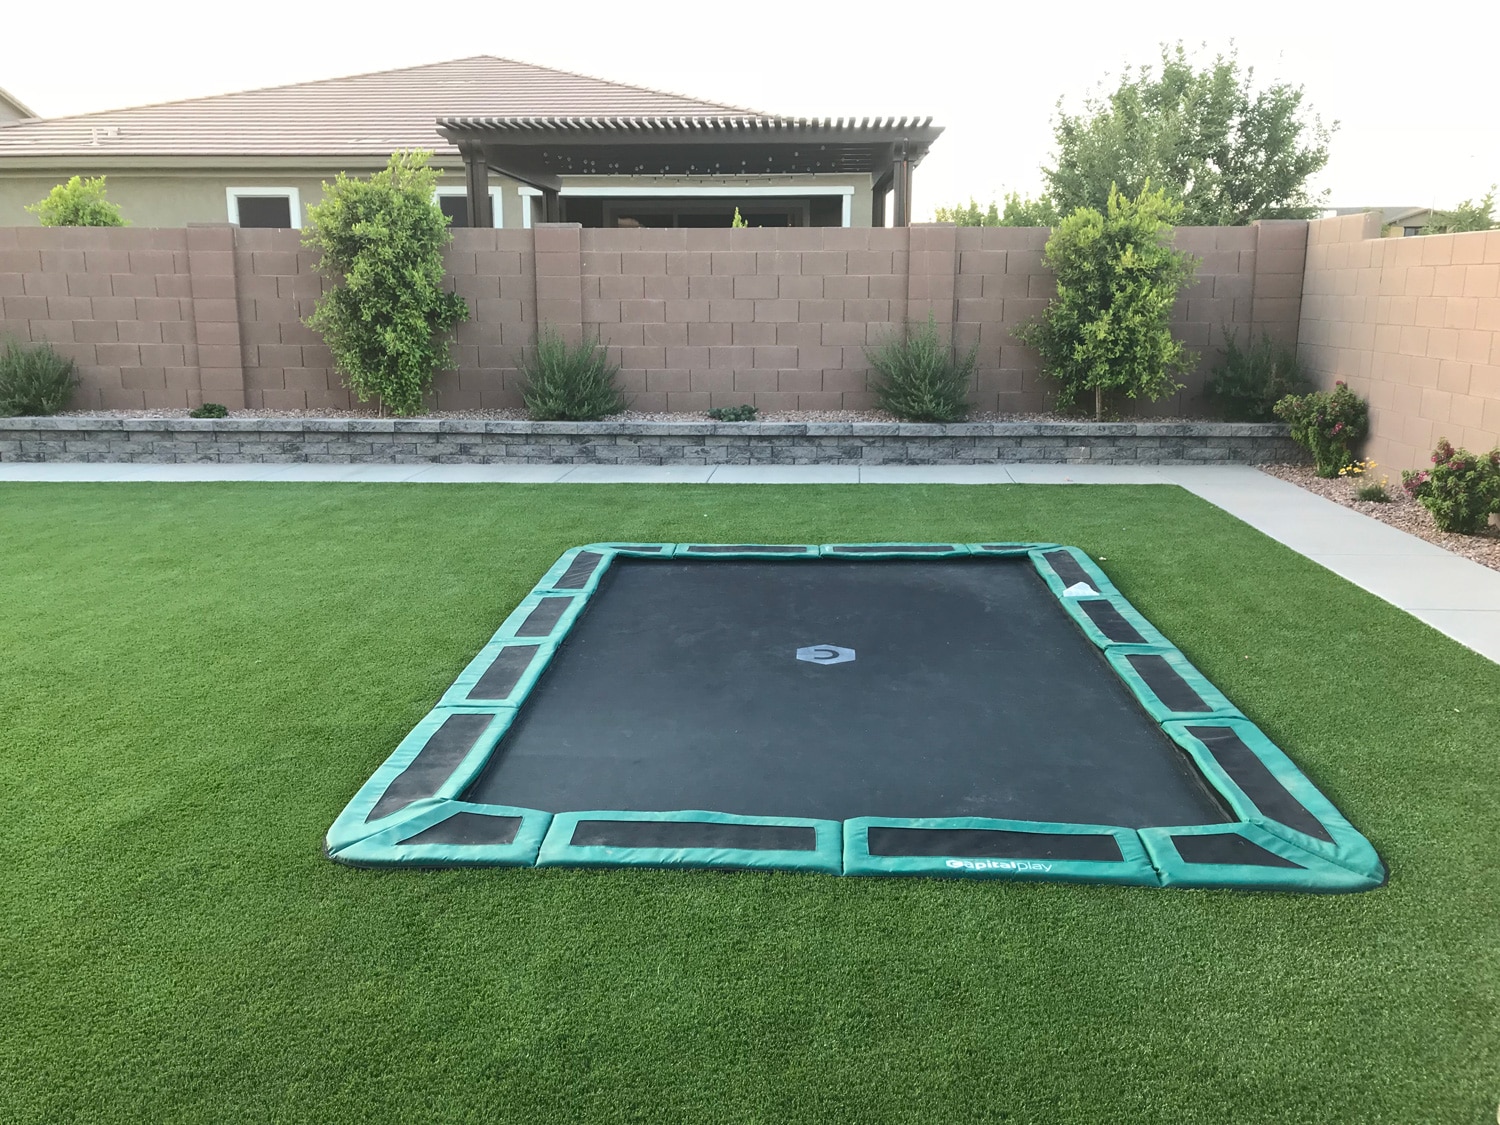 Green rectangular in-ground trampoline installers in Arizona